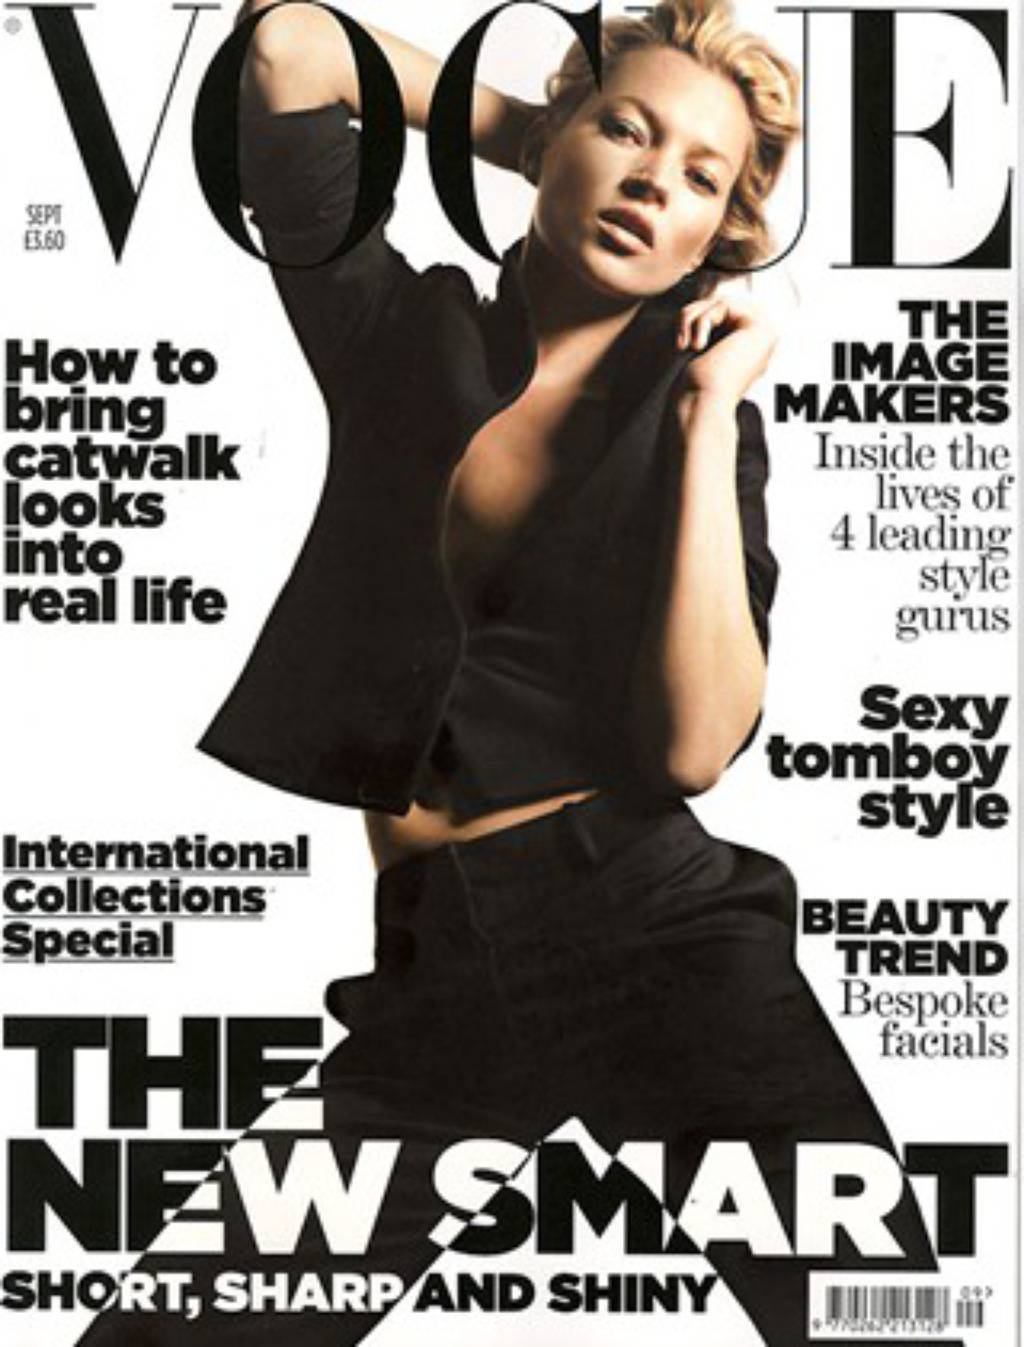 Vogue.co.uk